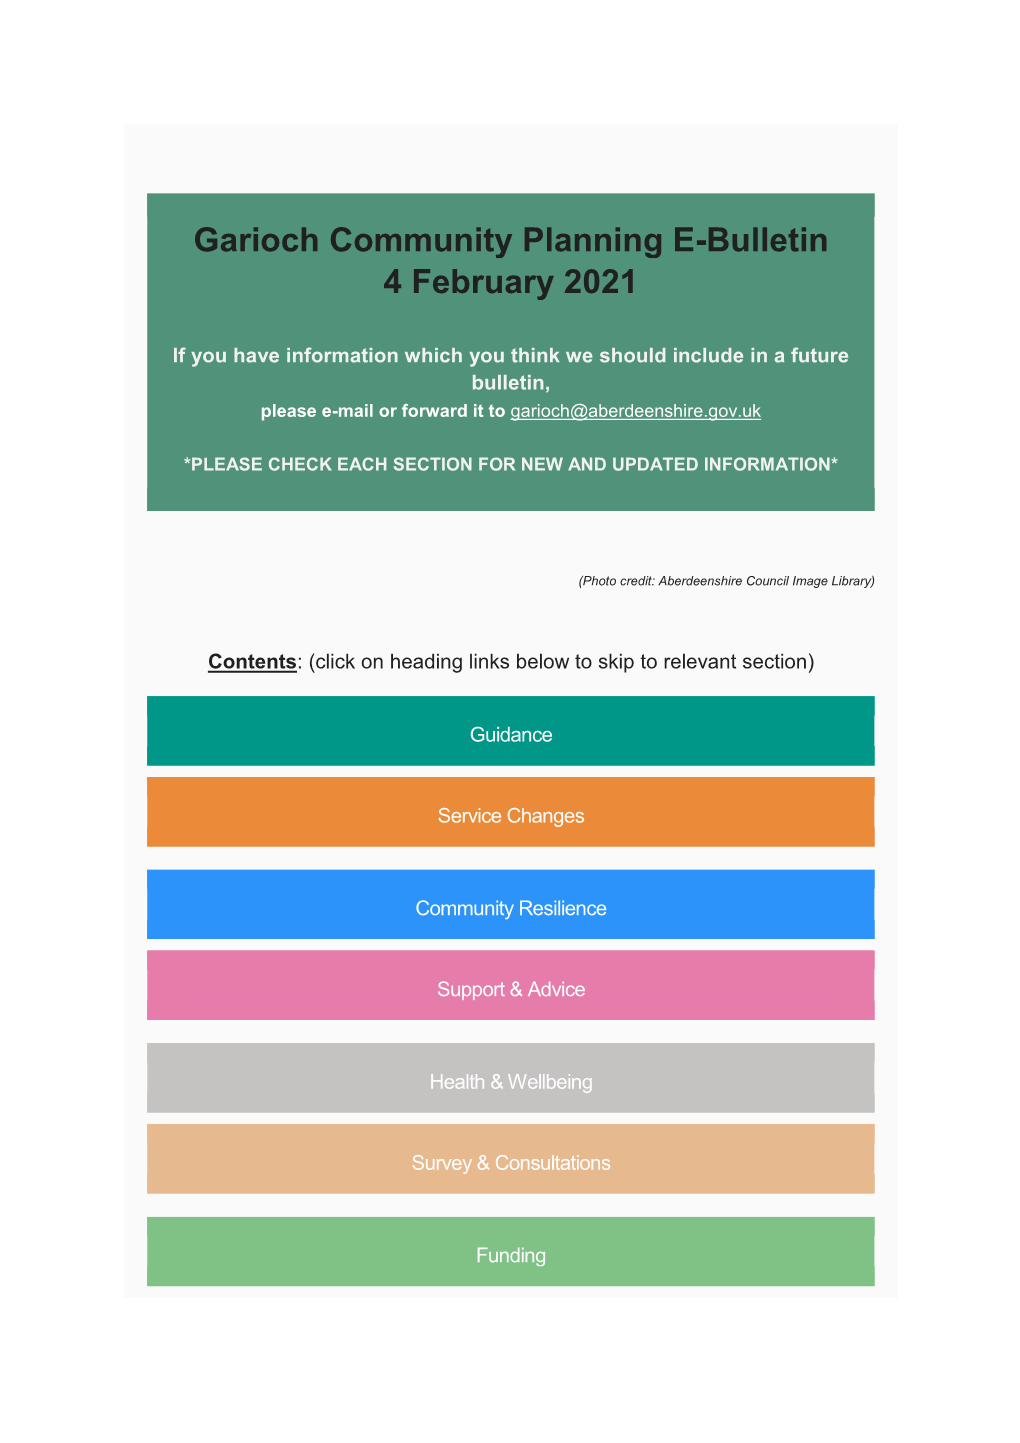 Garioch Community Planning E-Bulletin 4 February 2021